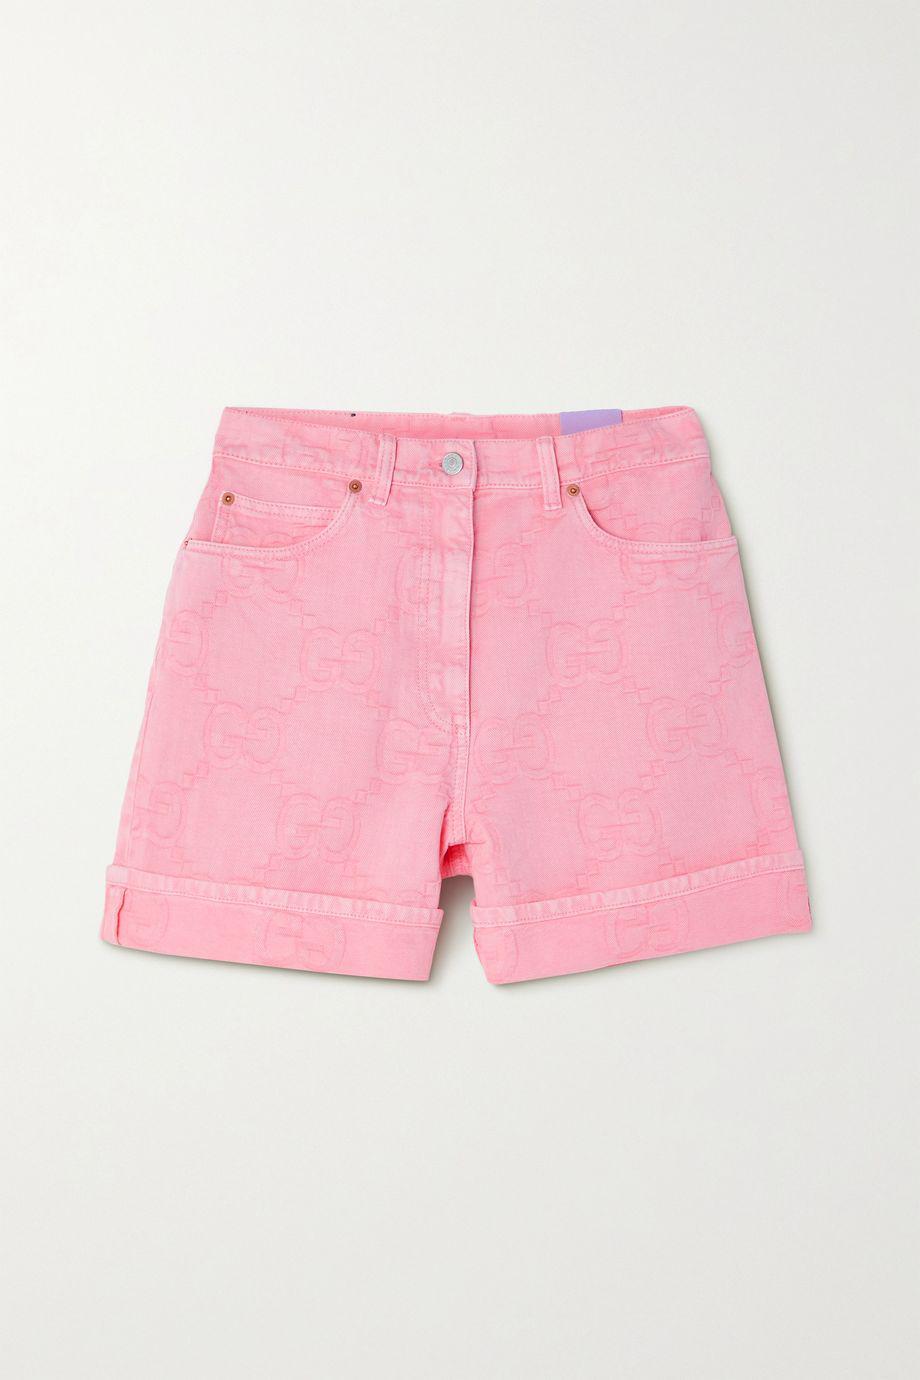 Love Parade denim-jacquard shorts by GUCCI